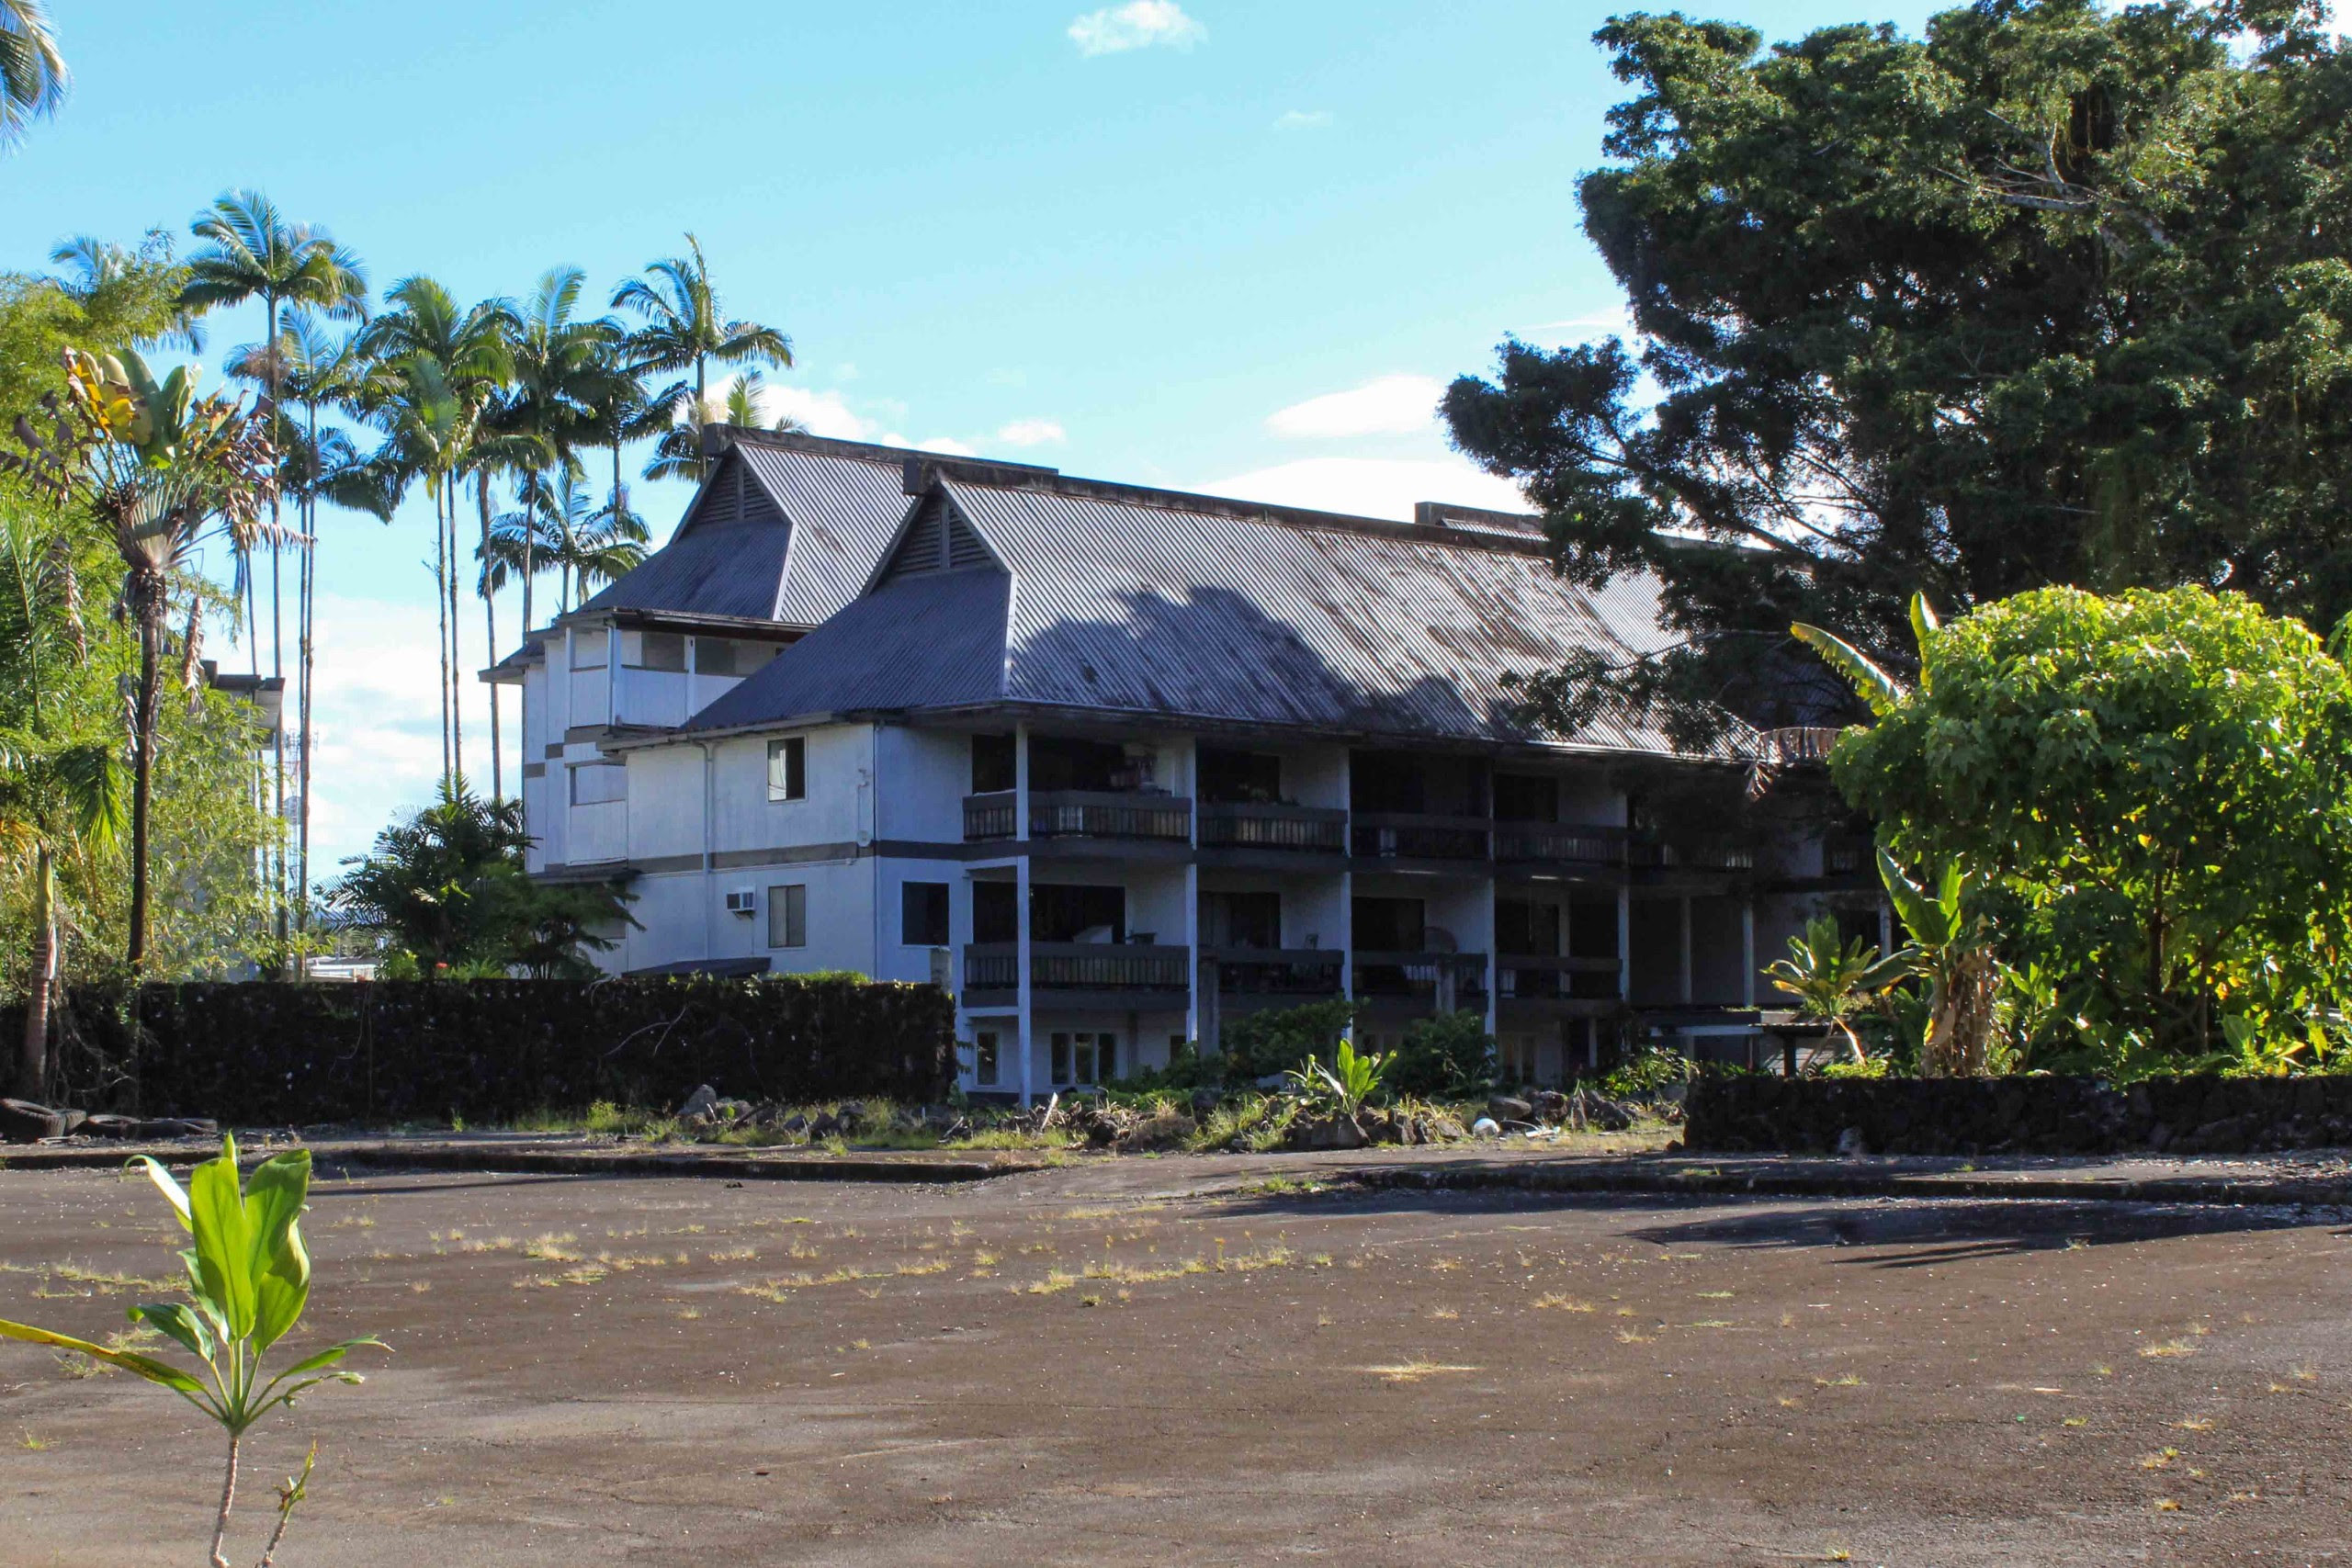 The Waiakea Villas in Hilo, Hawaiʻi. | Photo: Joelle Cabasa